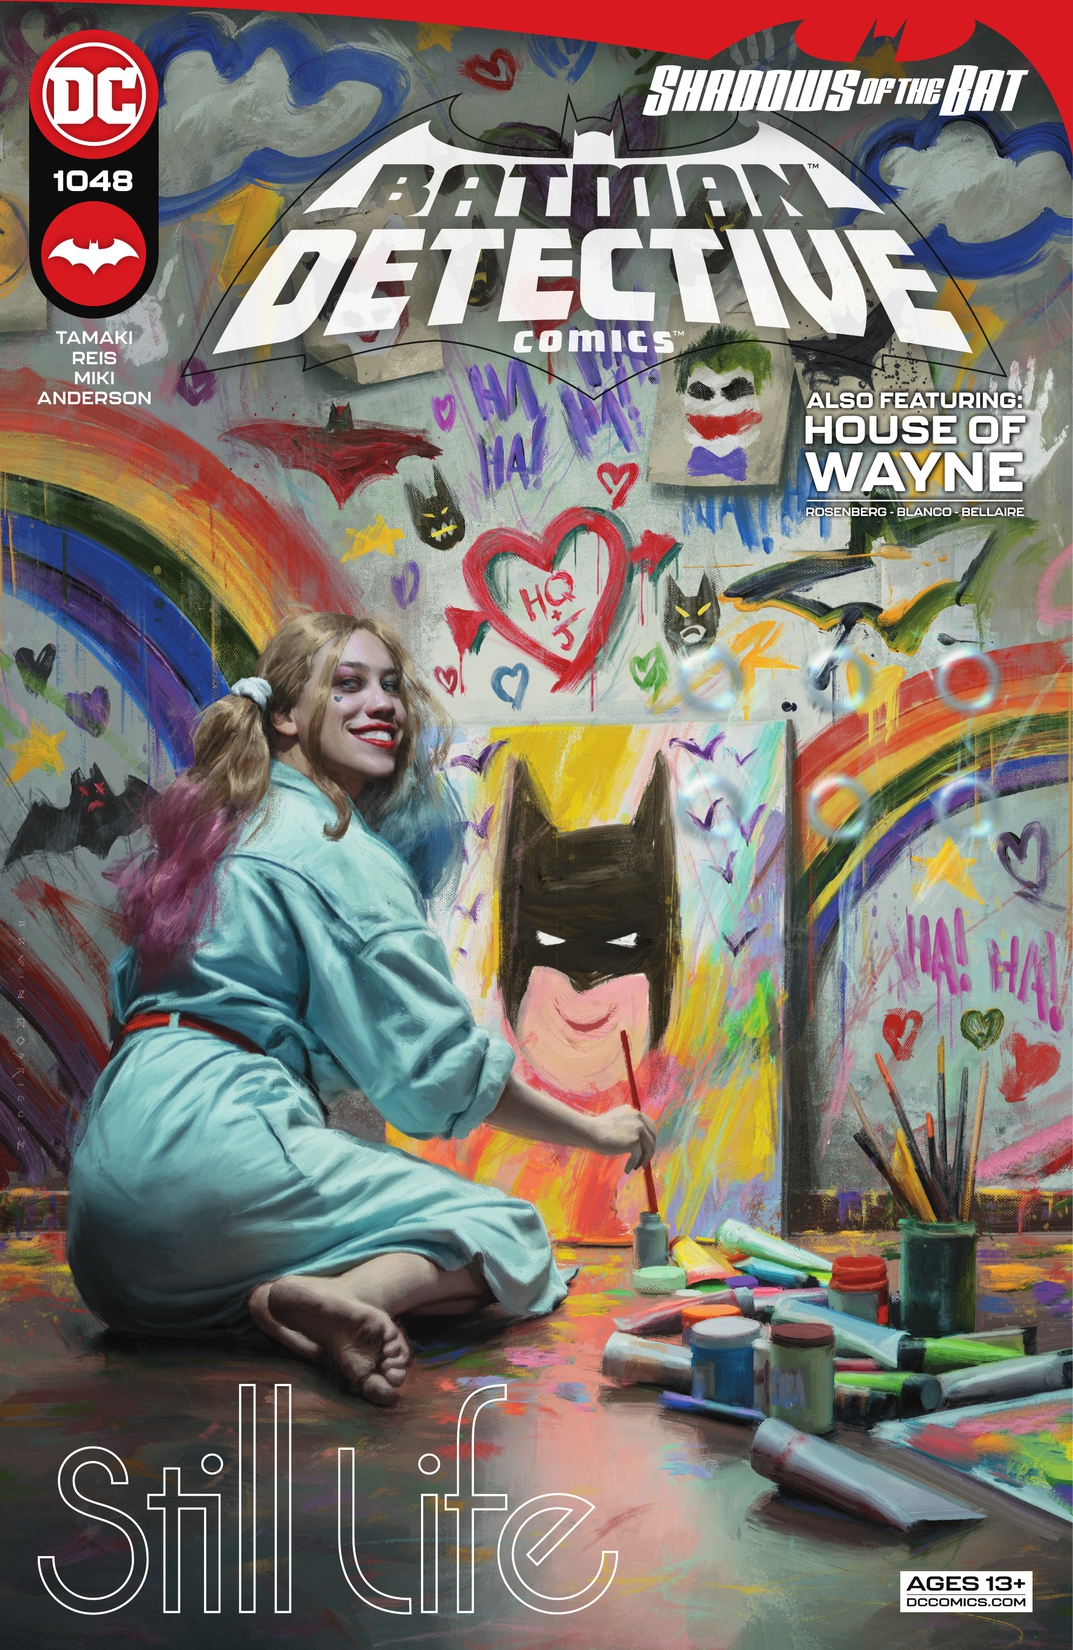 Detective Comics (2016-) #1048 preview images